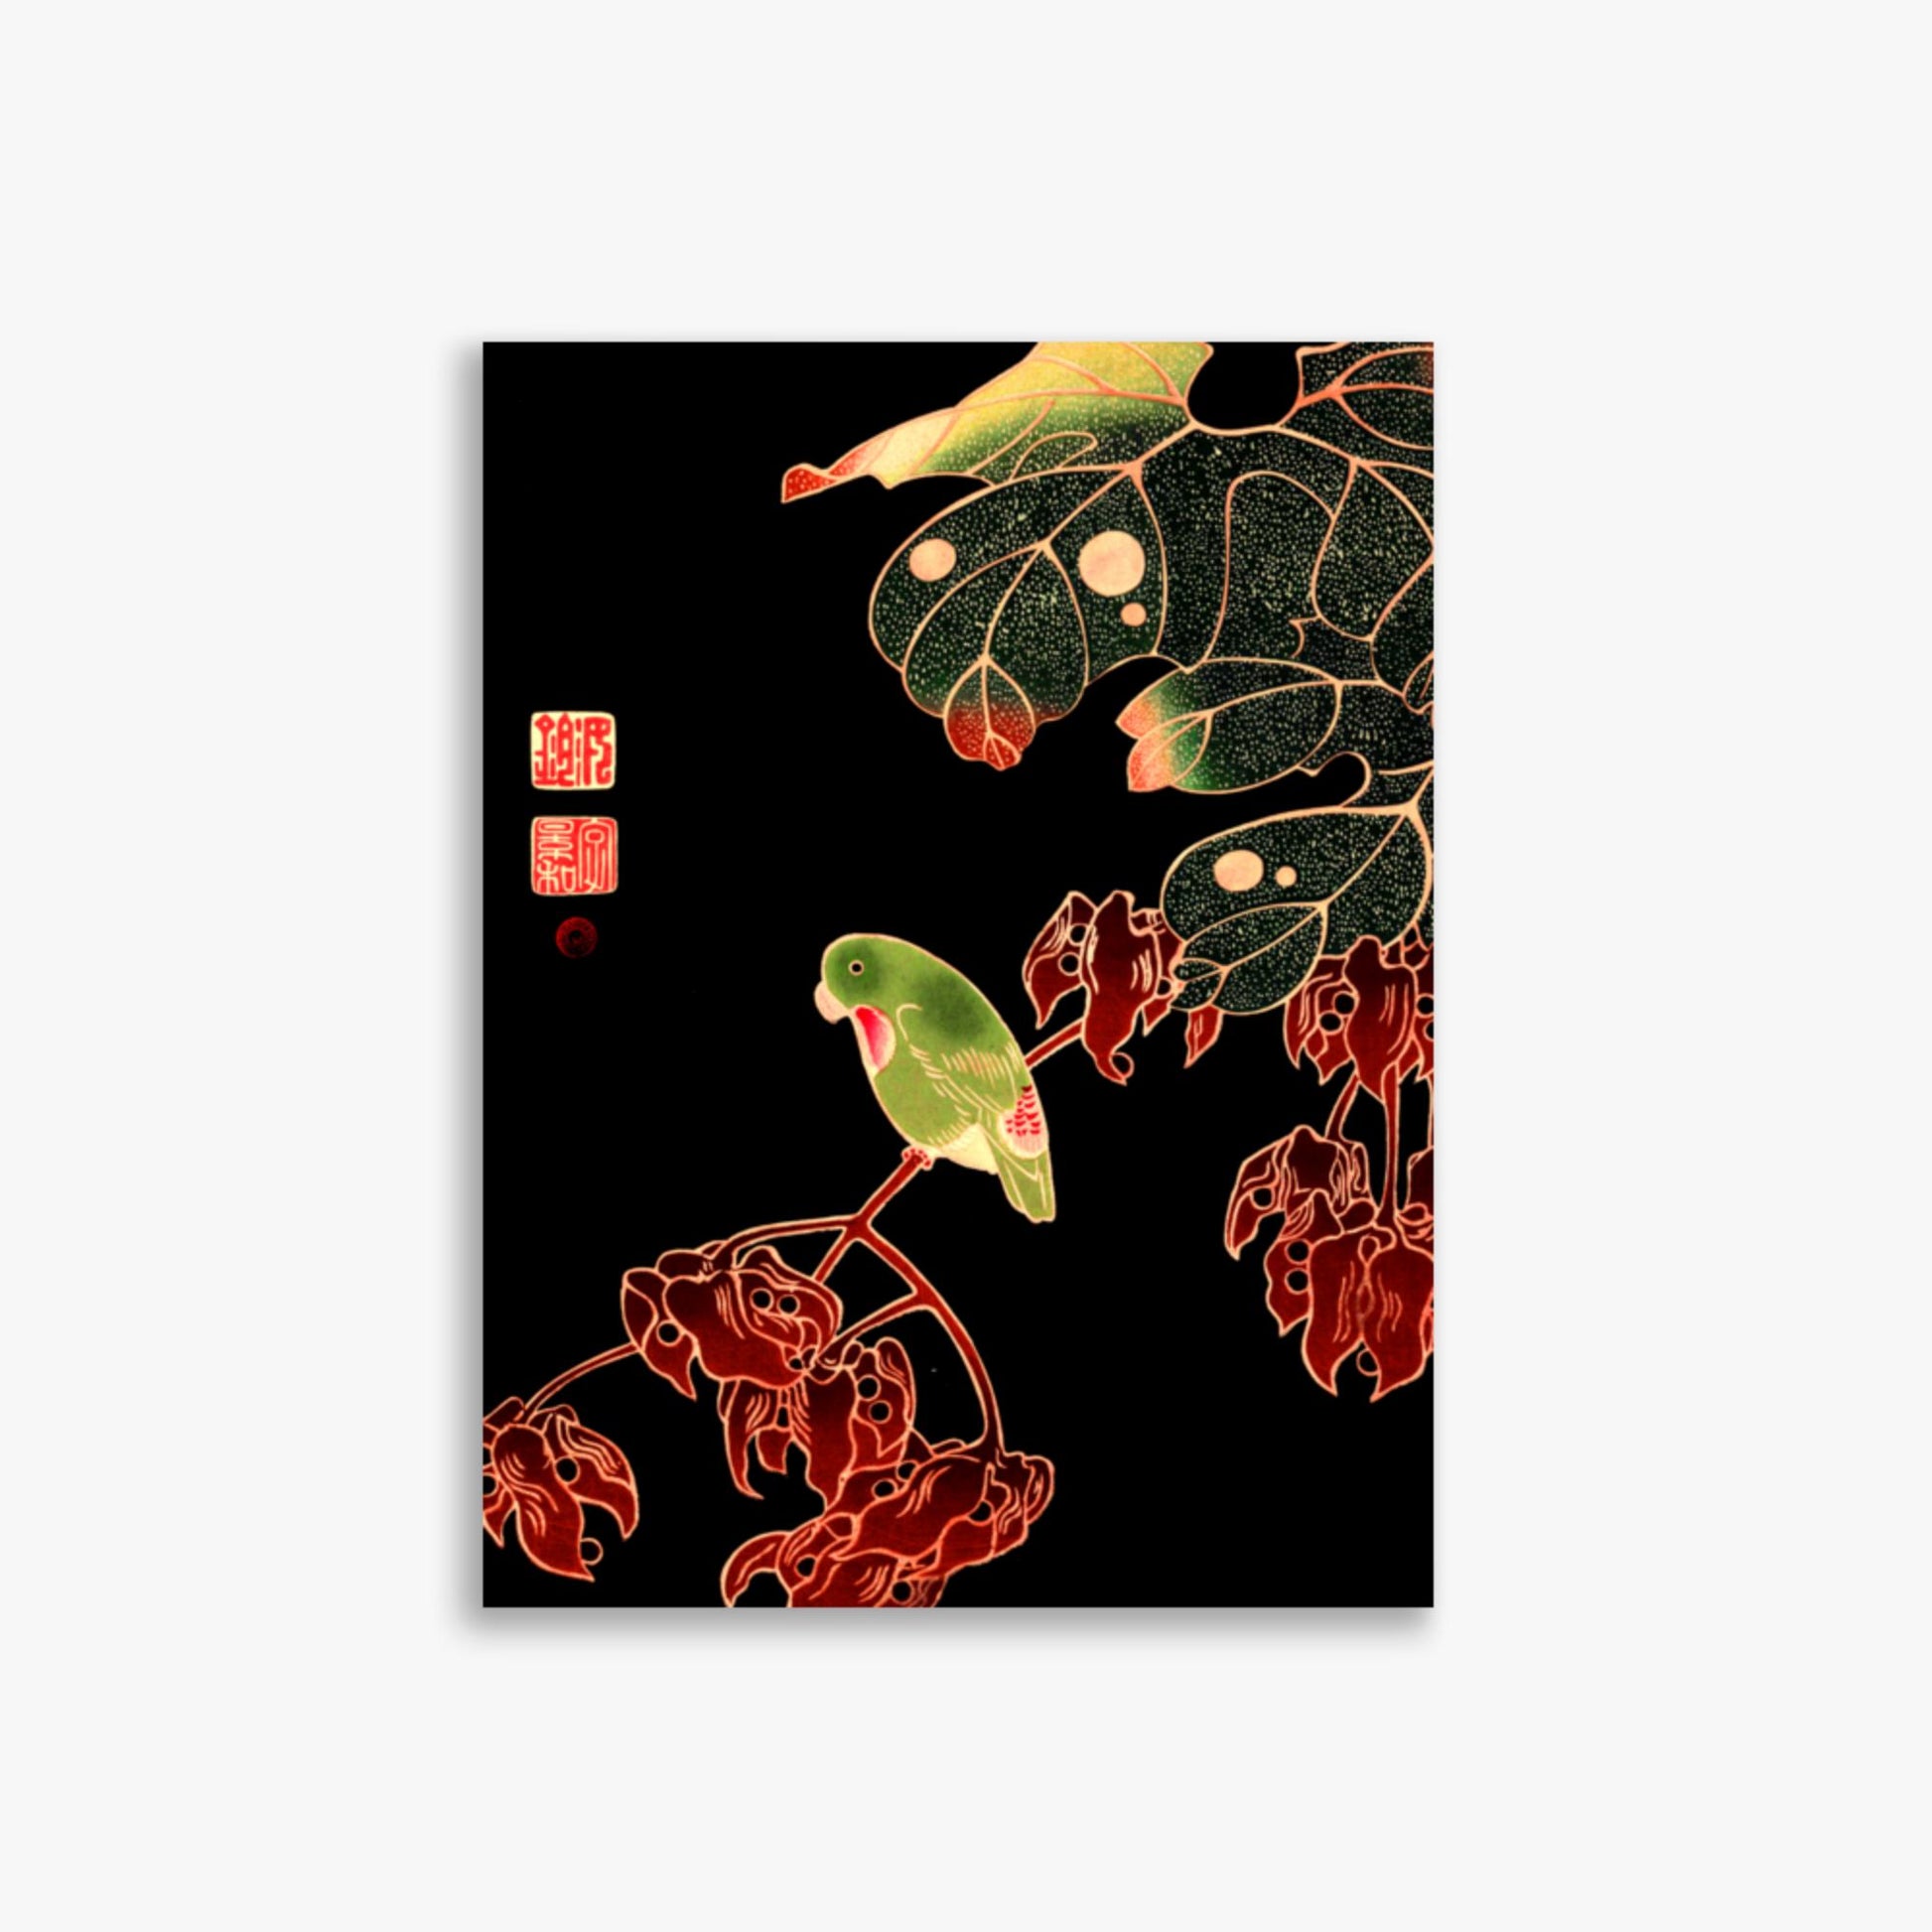 Ito Jakuchu - The Paroquet 30x40 cm Poster